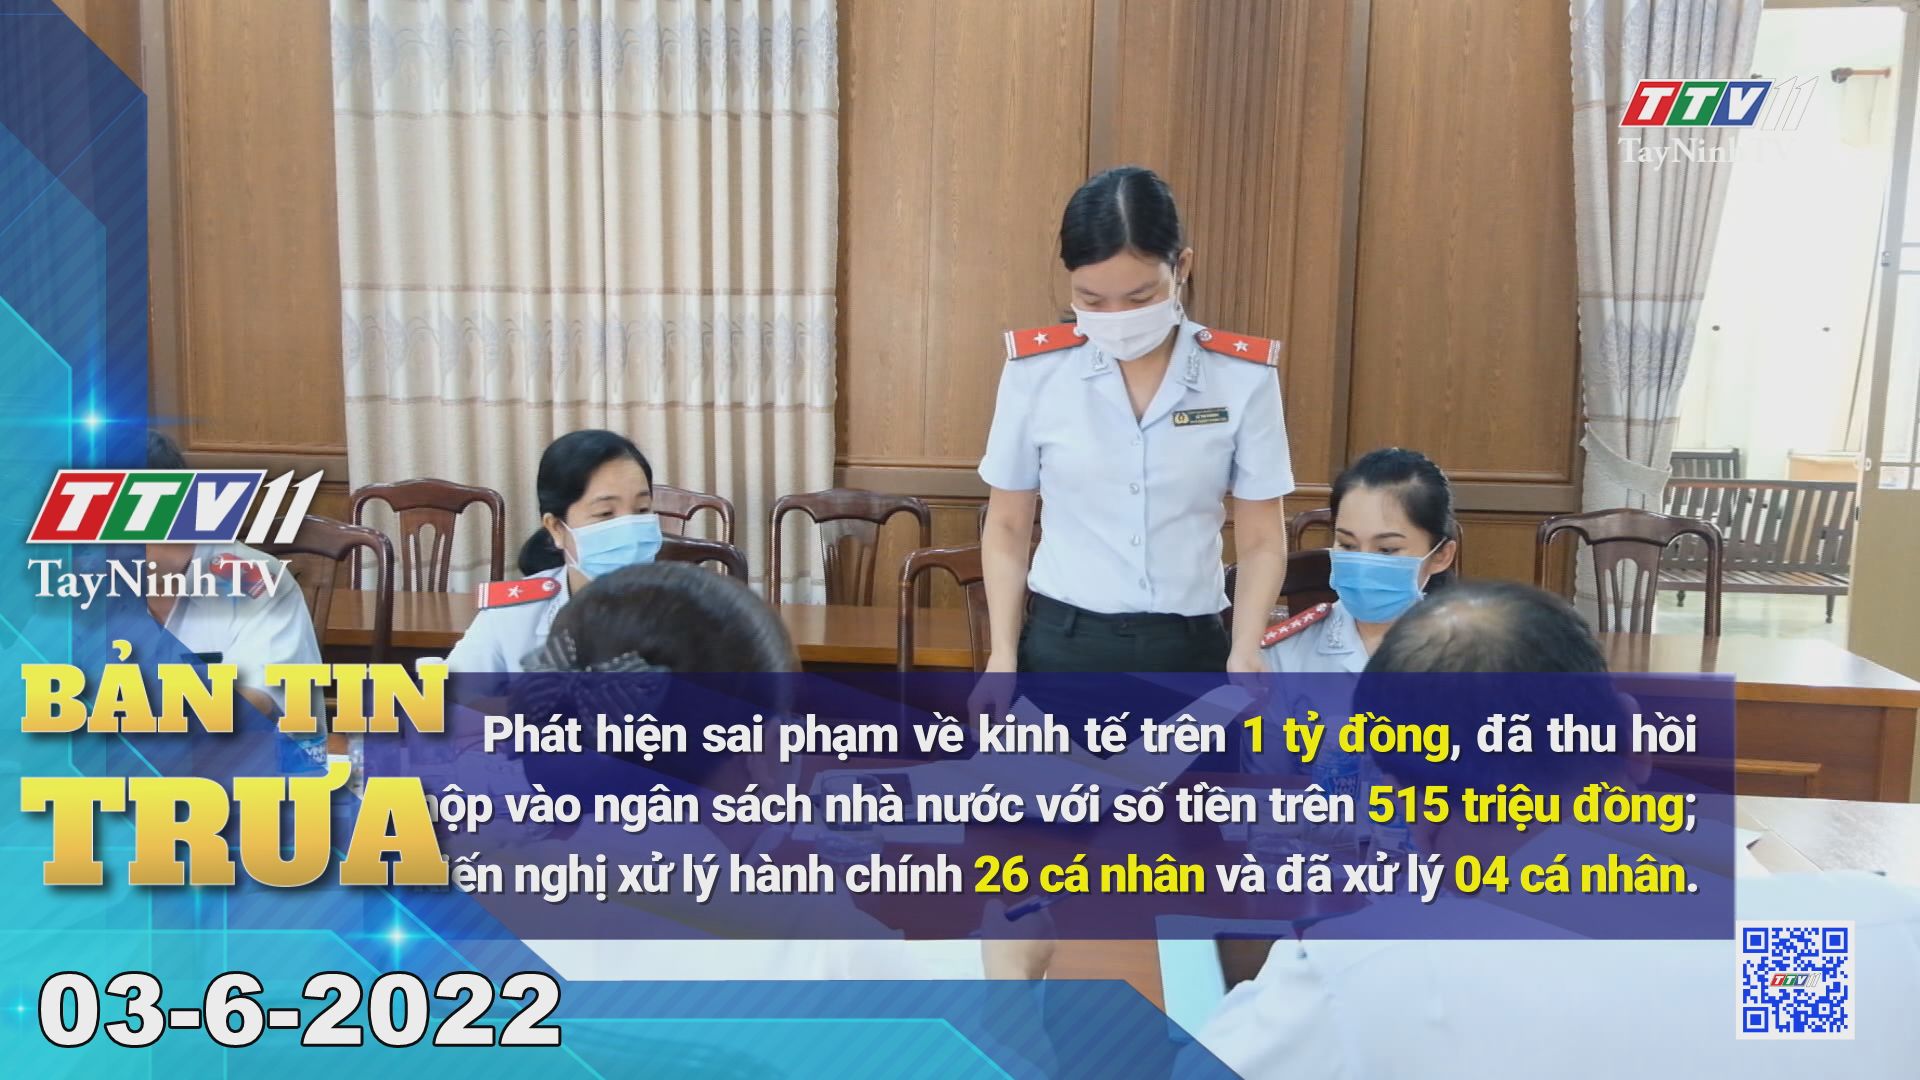 Bản tin trưa 03-6-2022 | Tin tức hôm nay | TayNinhTV